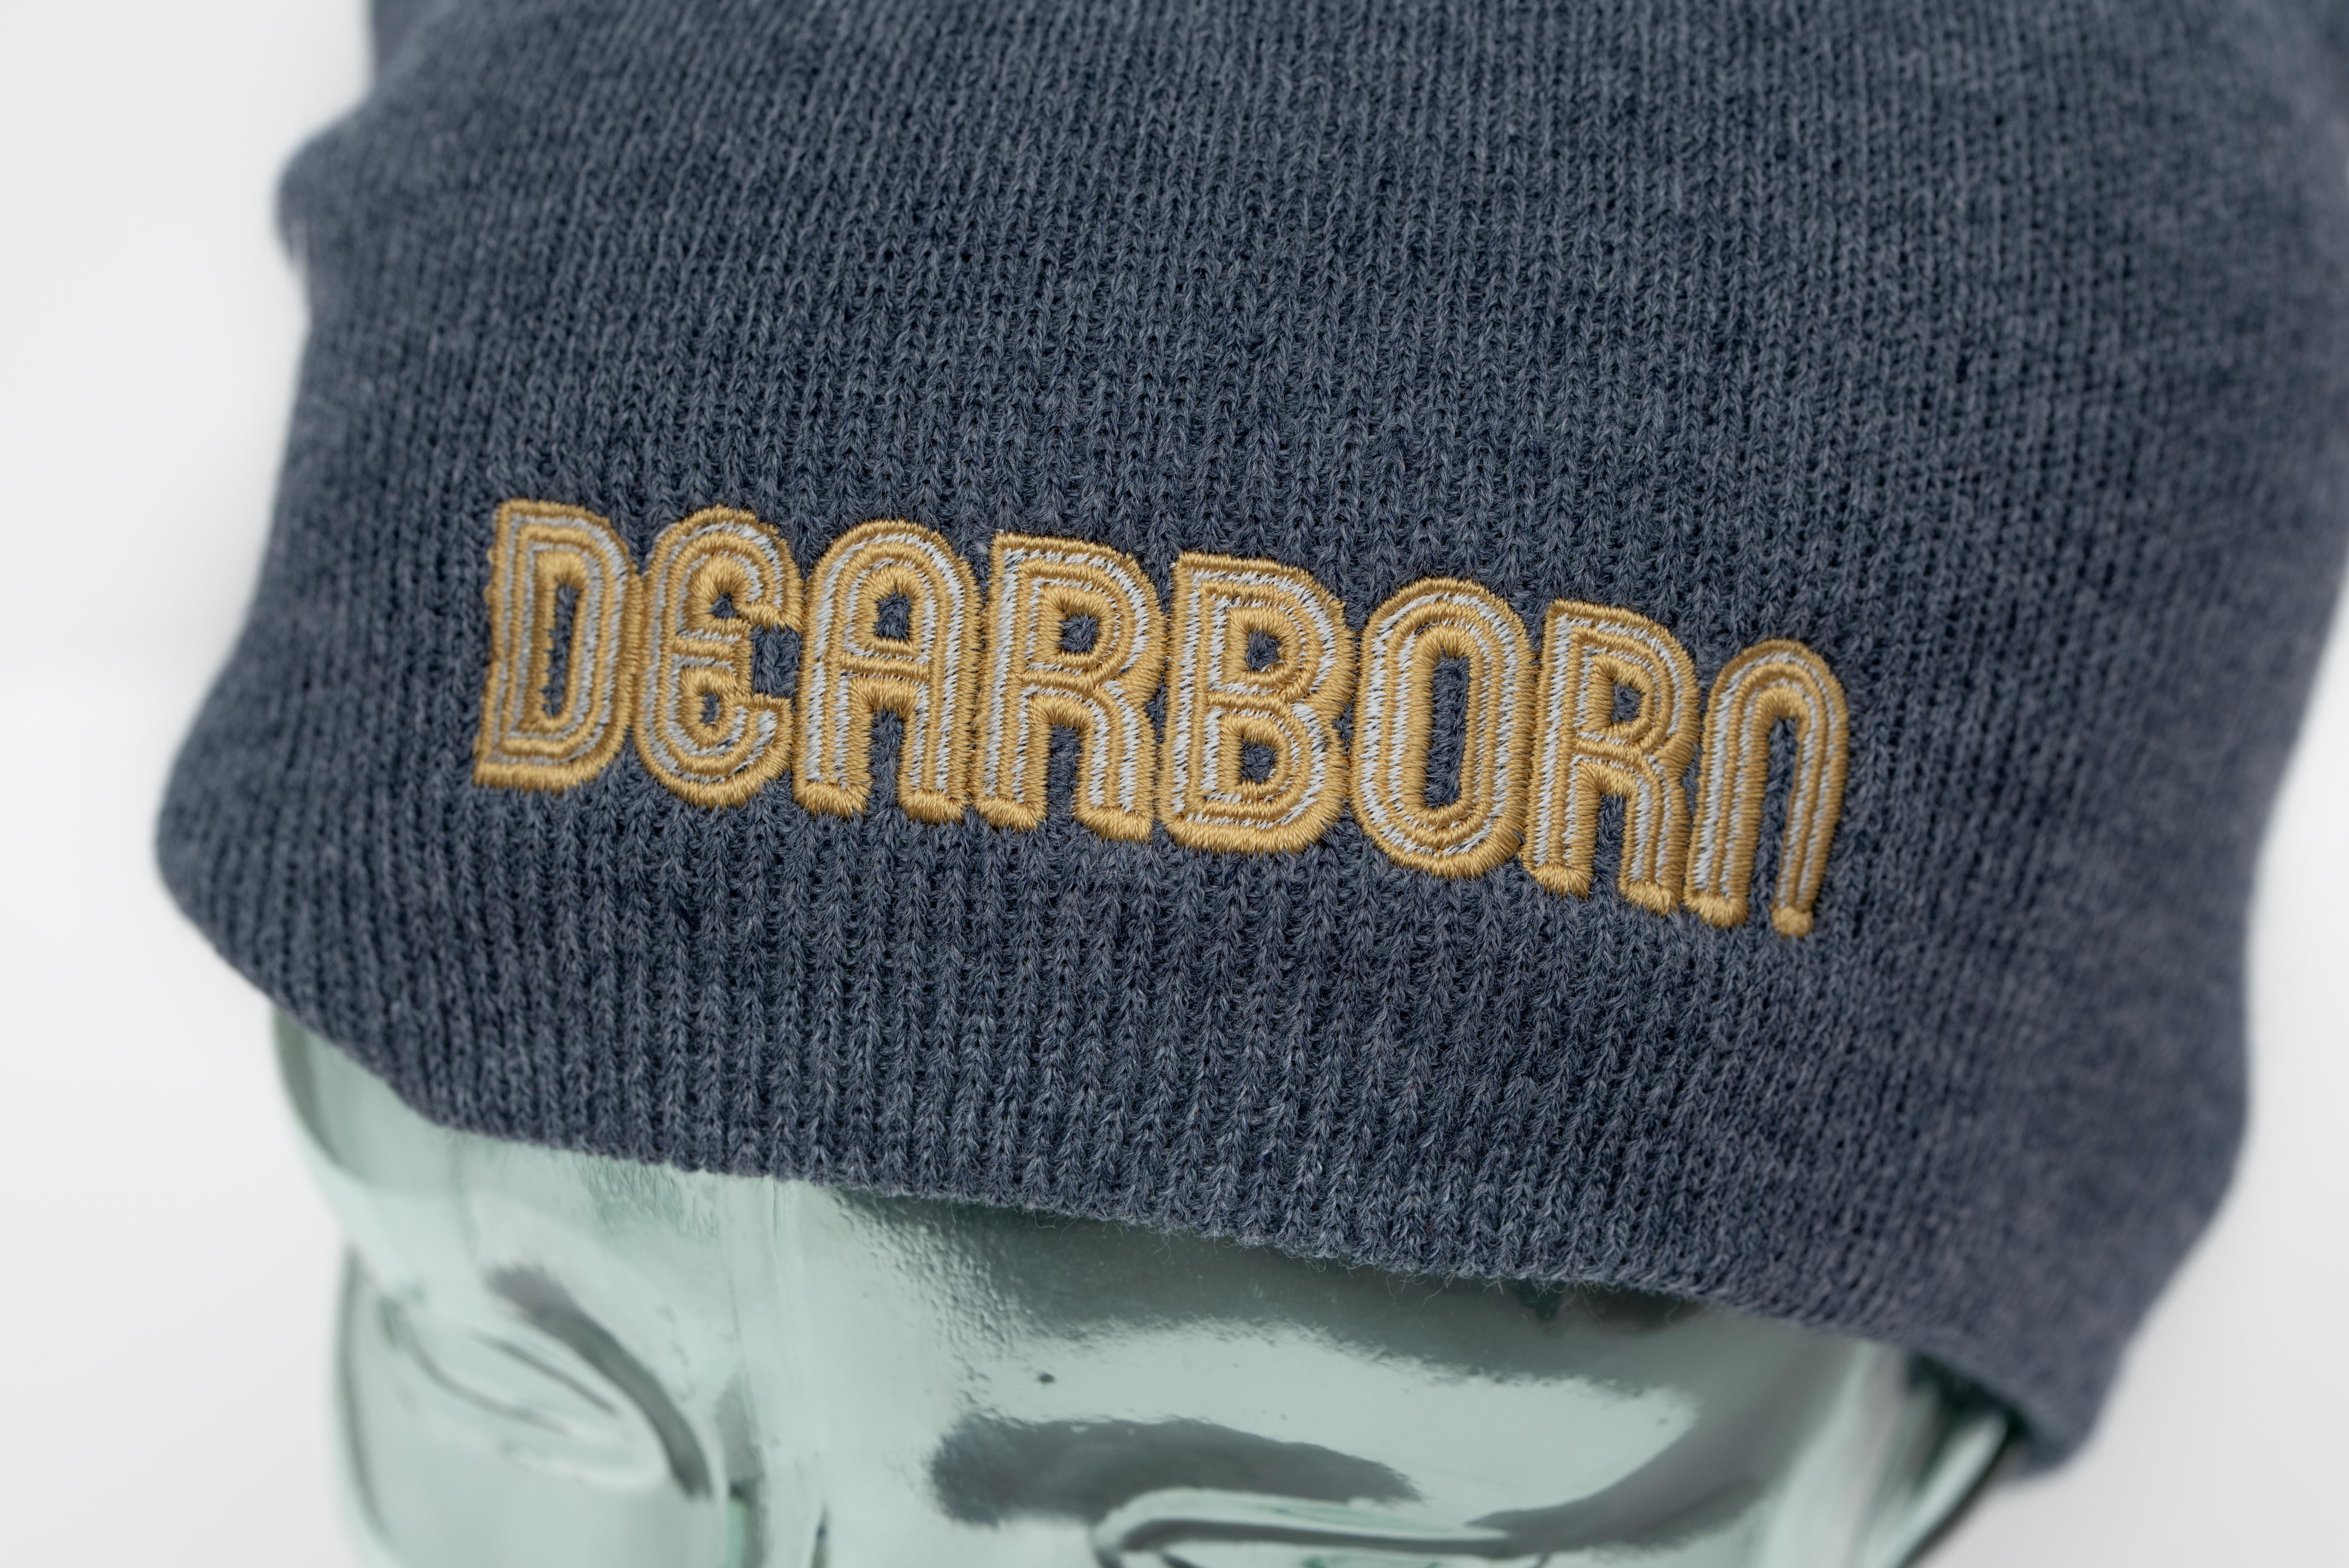 Embroidered Dearborn Beanie